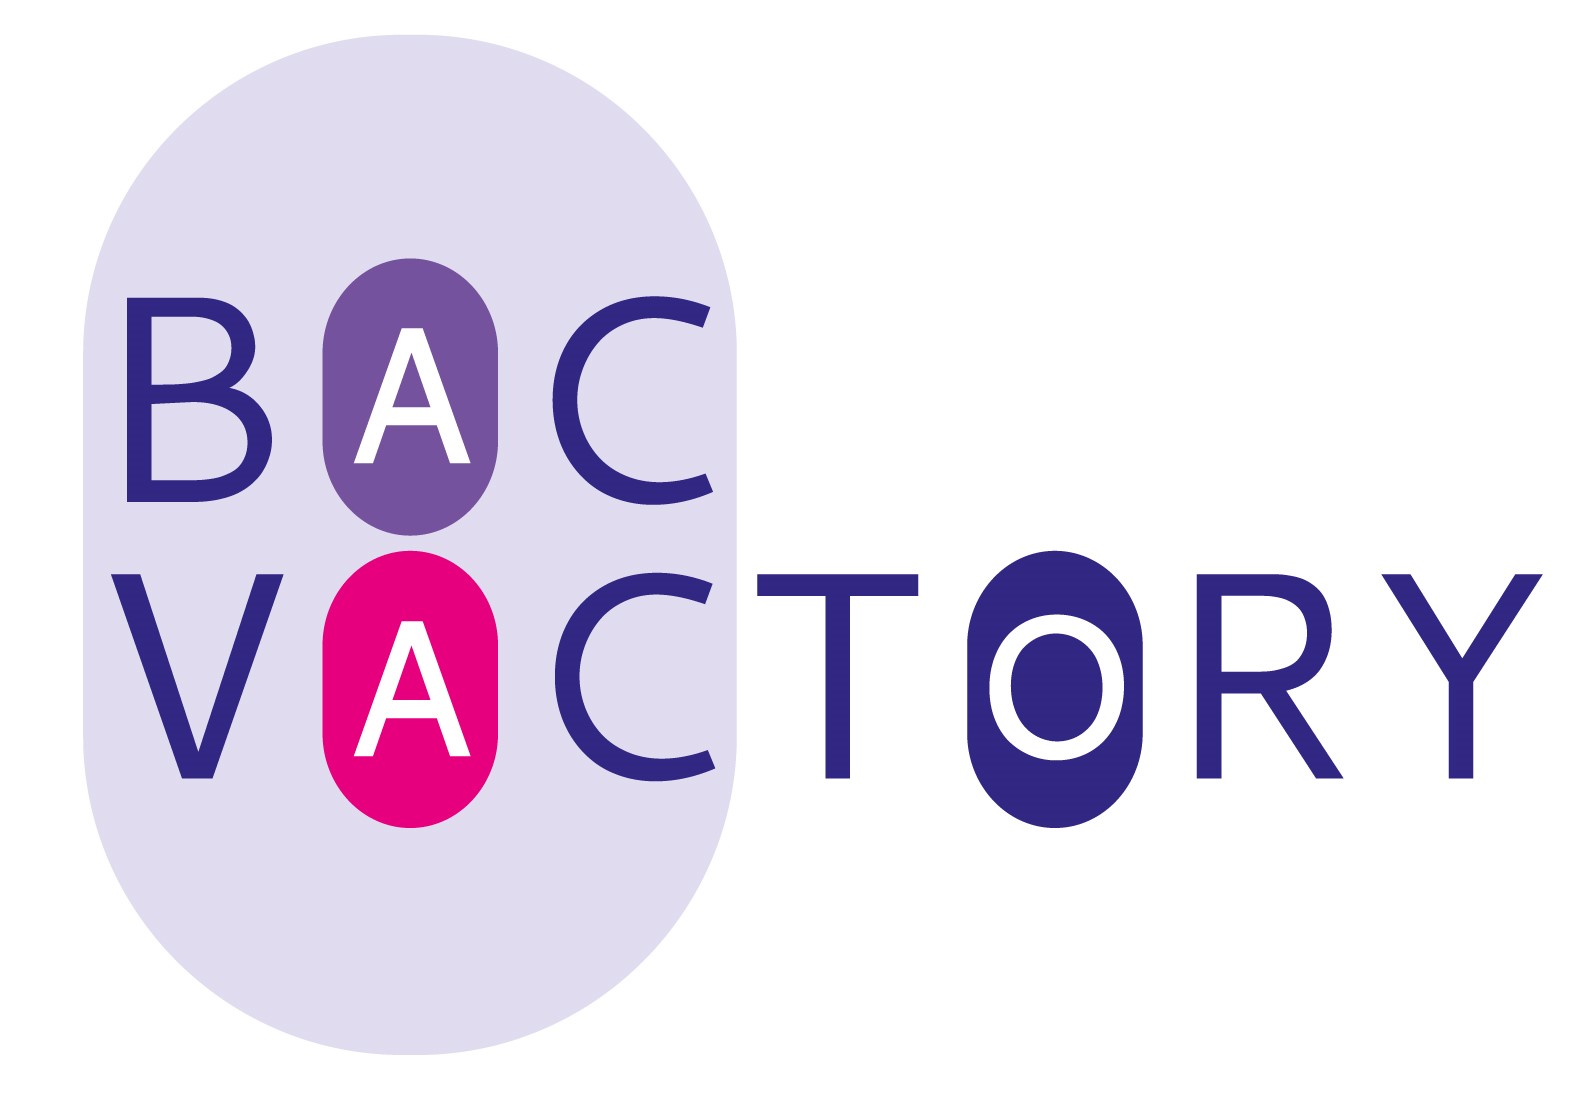 BAC Vactory logo